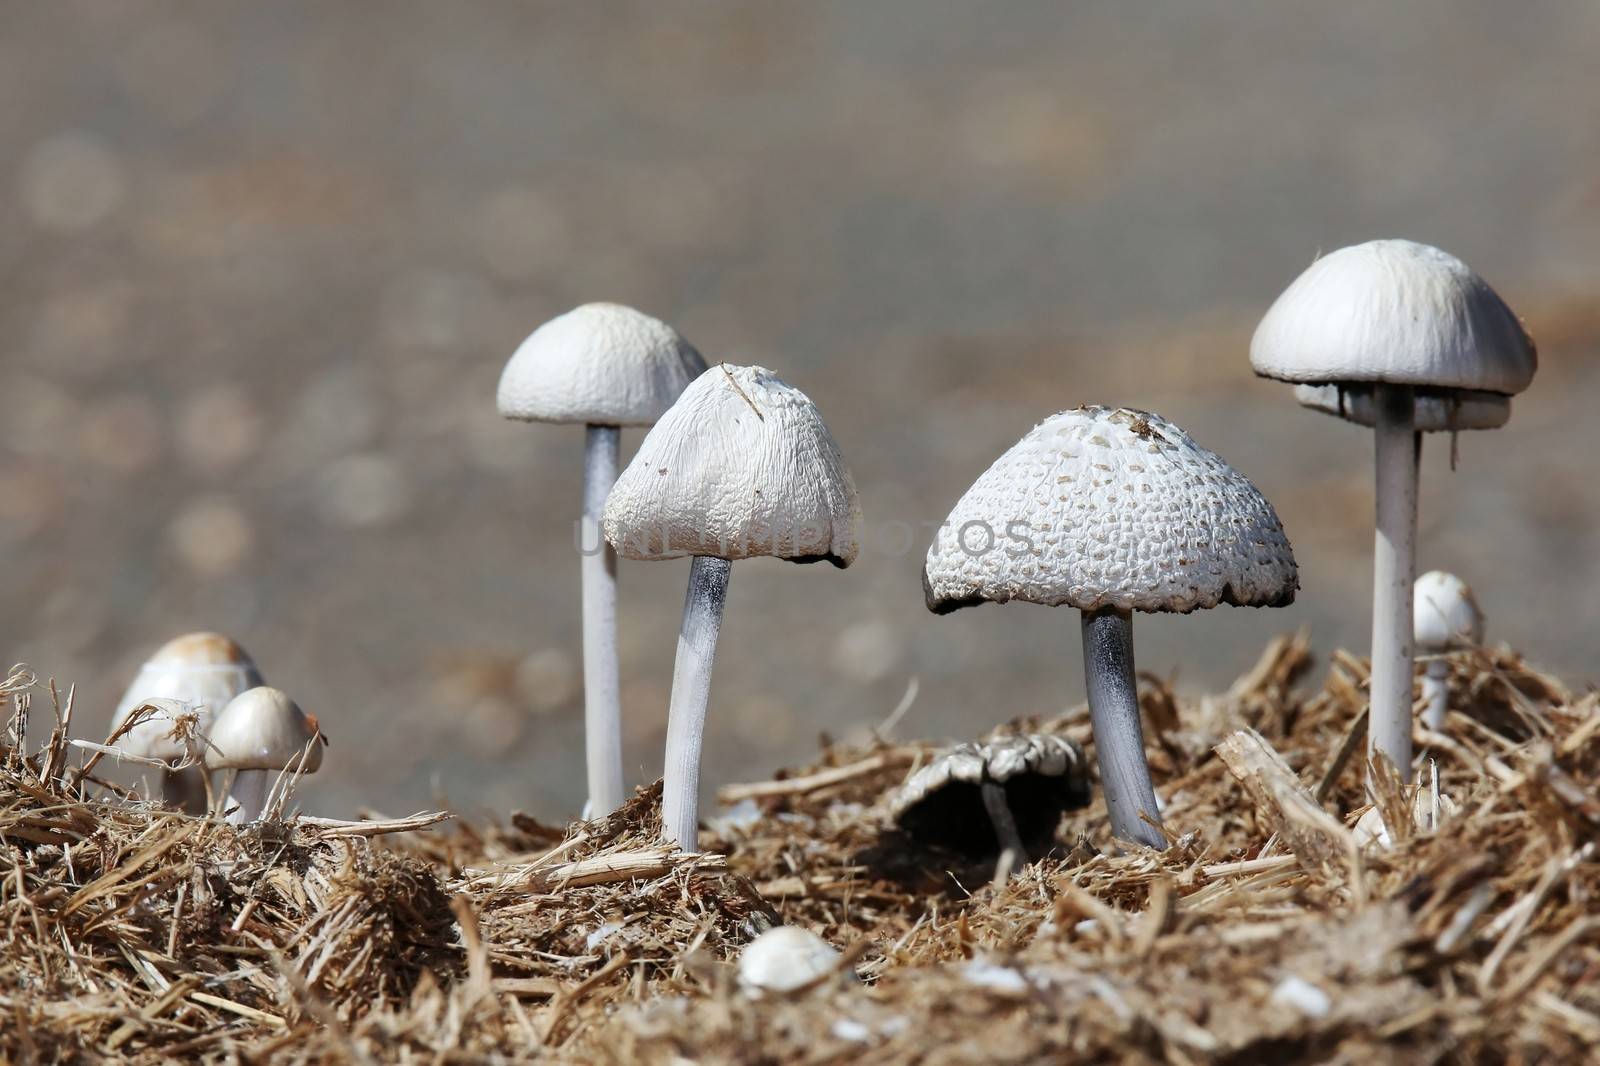 Wild Mushrooms by fouroaks